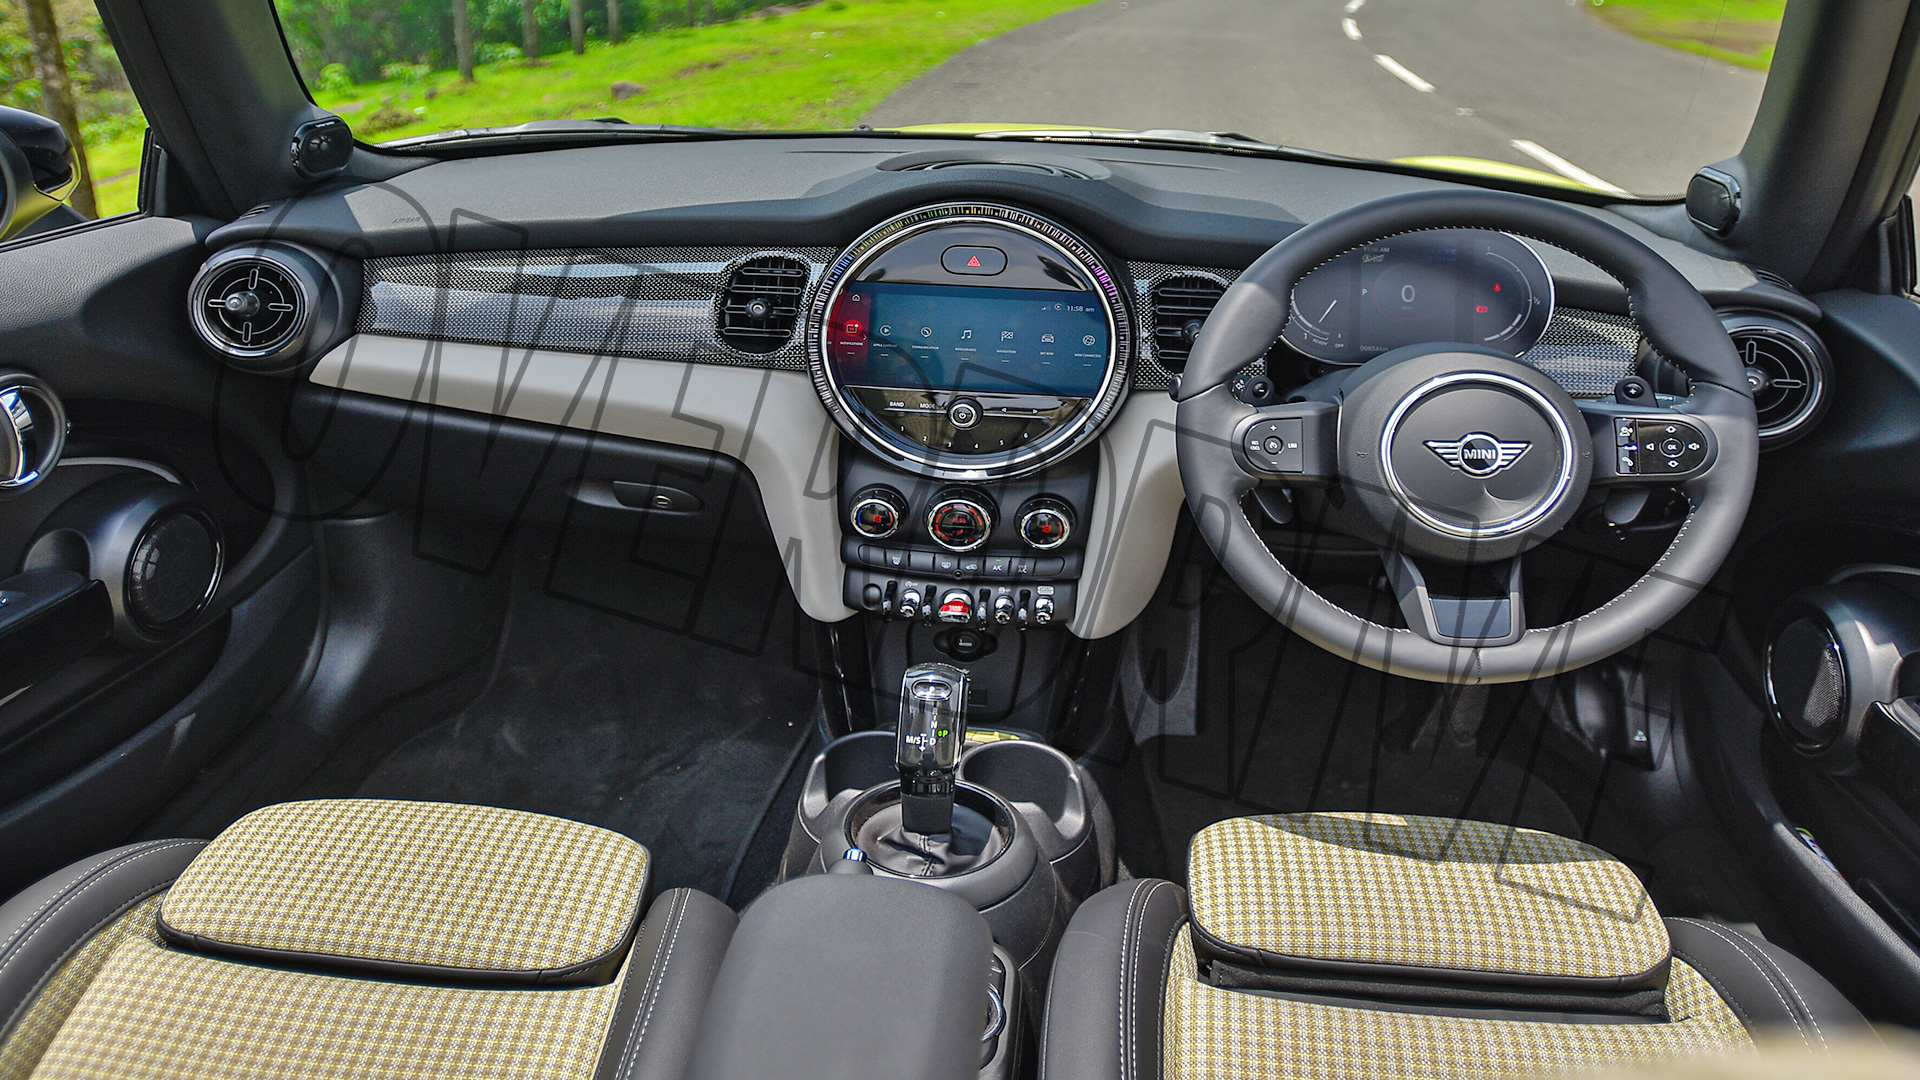 Mini Cooper S 2021 Convertible Interior Car Photos - Overdrive